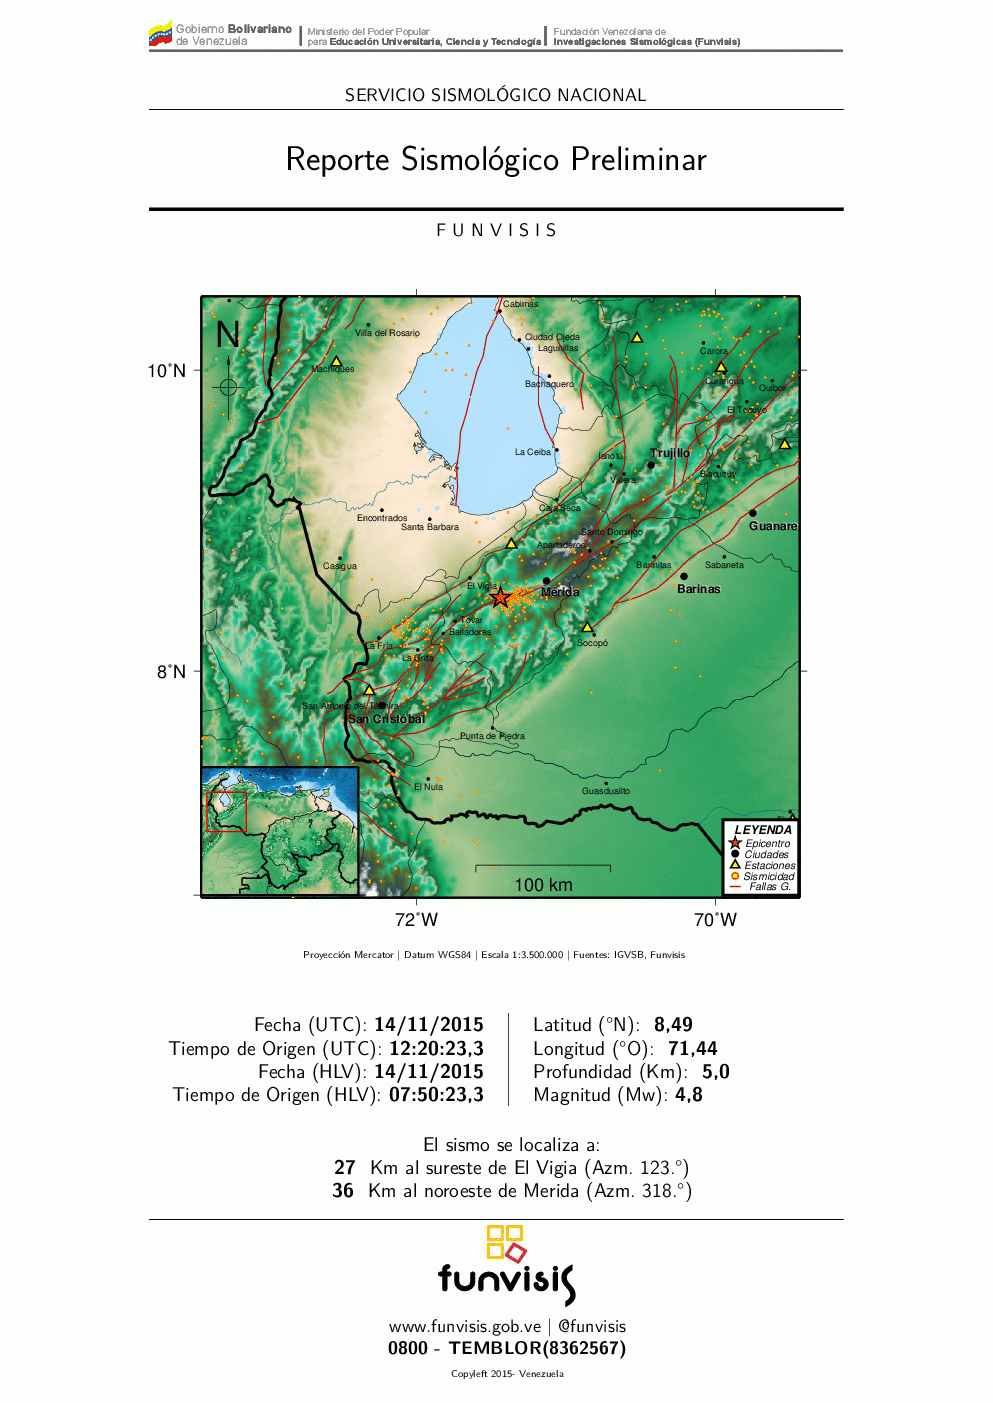 Volvió a temblar en Mérida este sábado: Magnitud 4.8